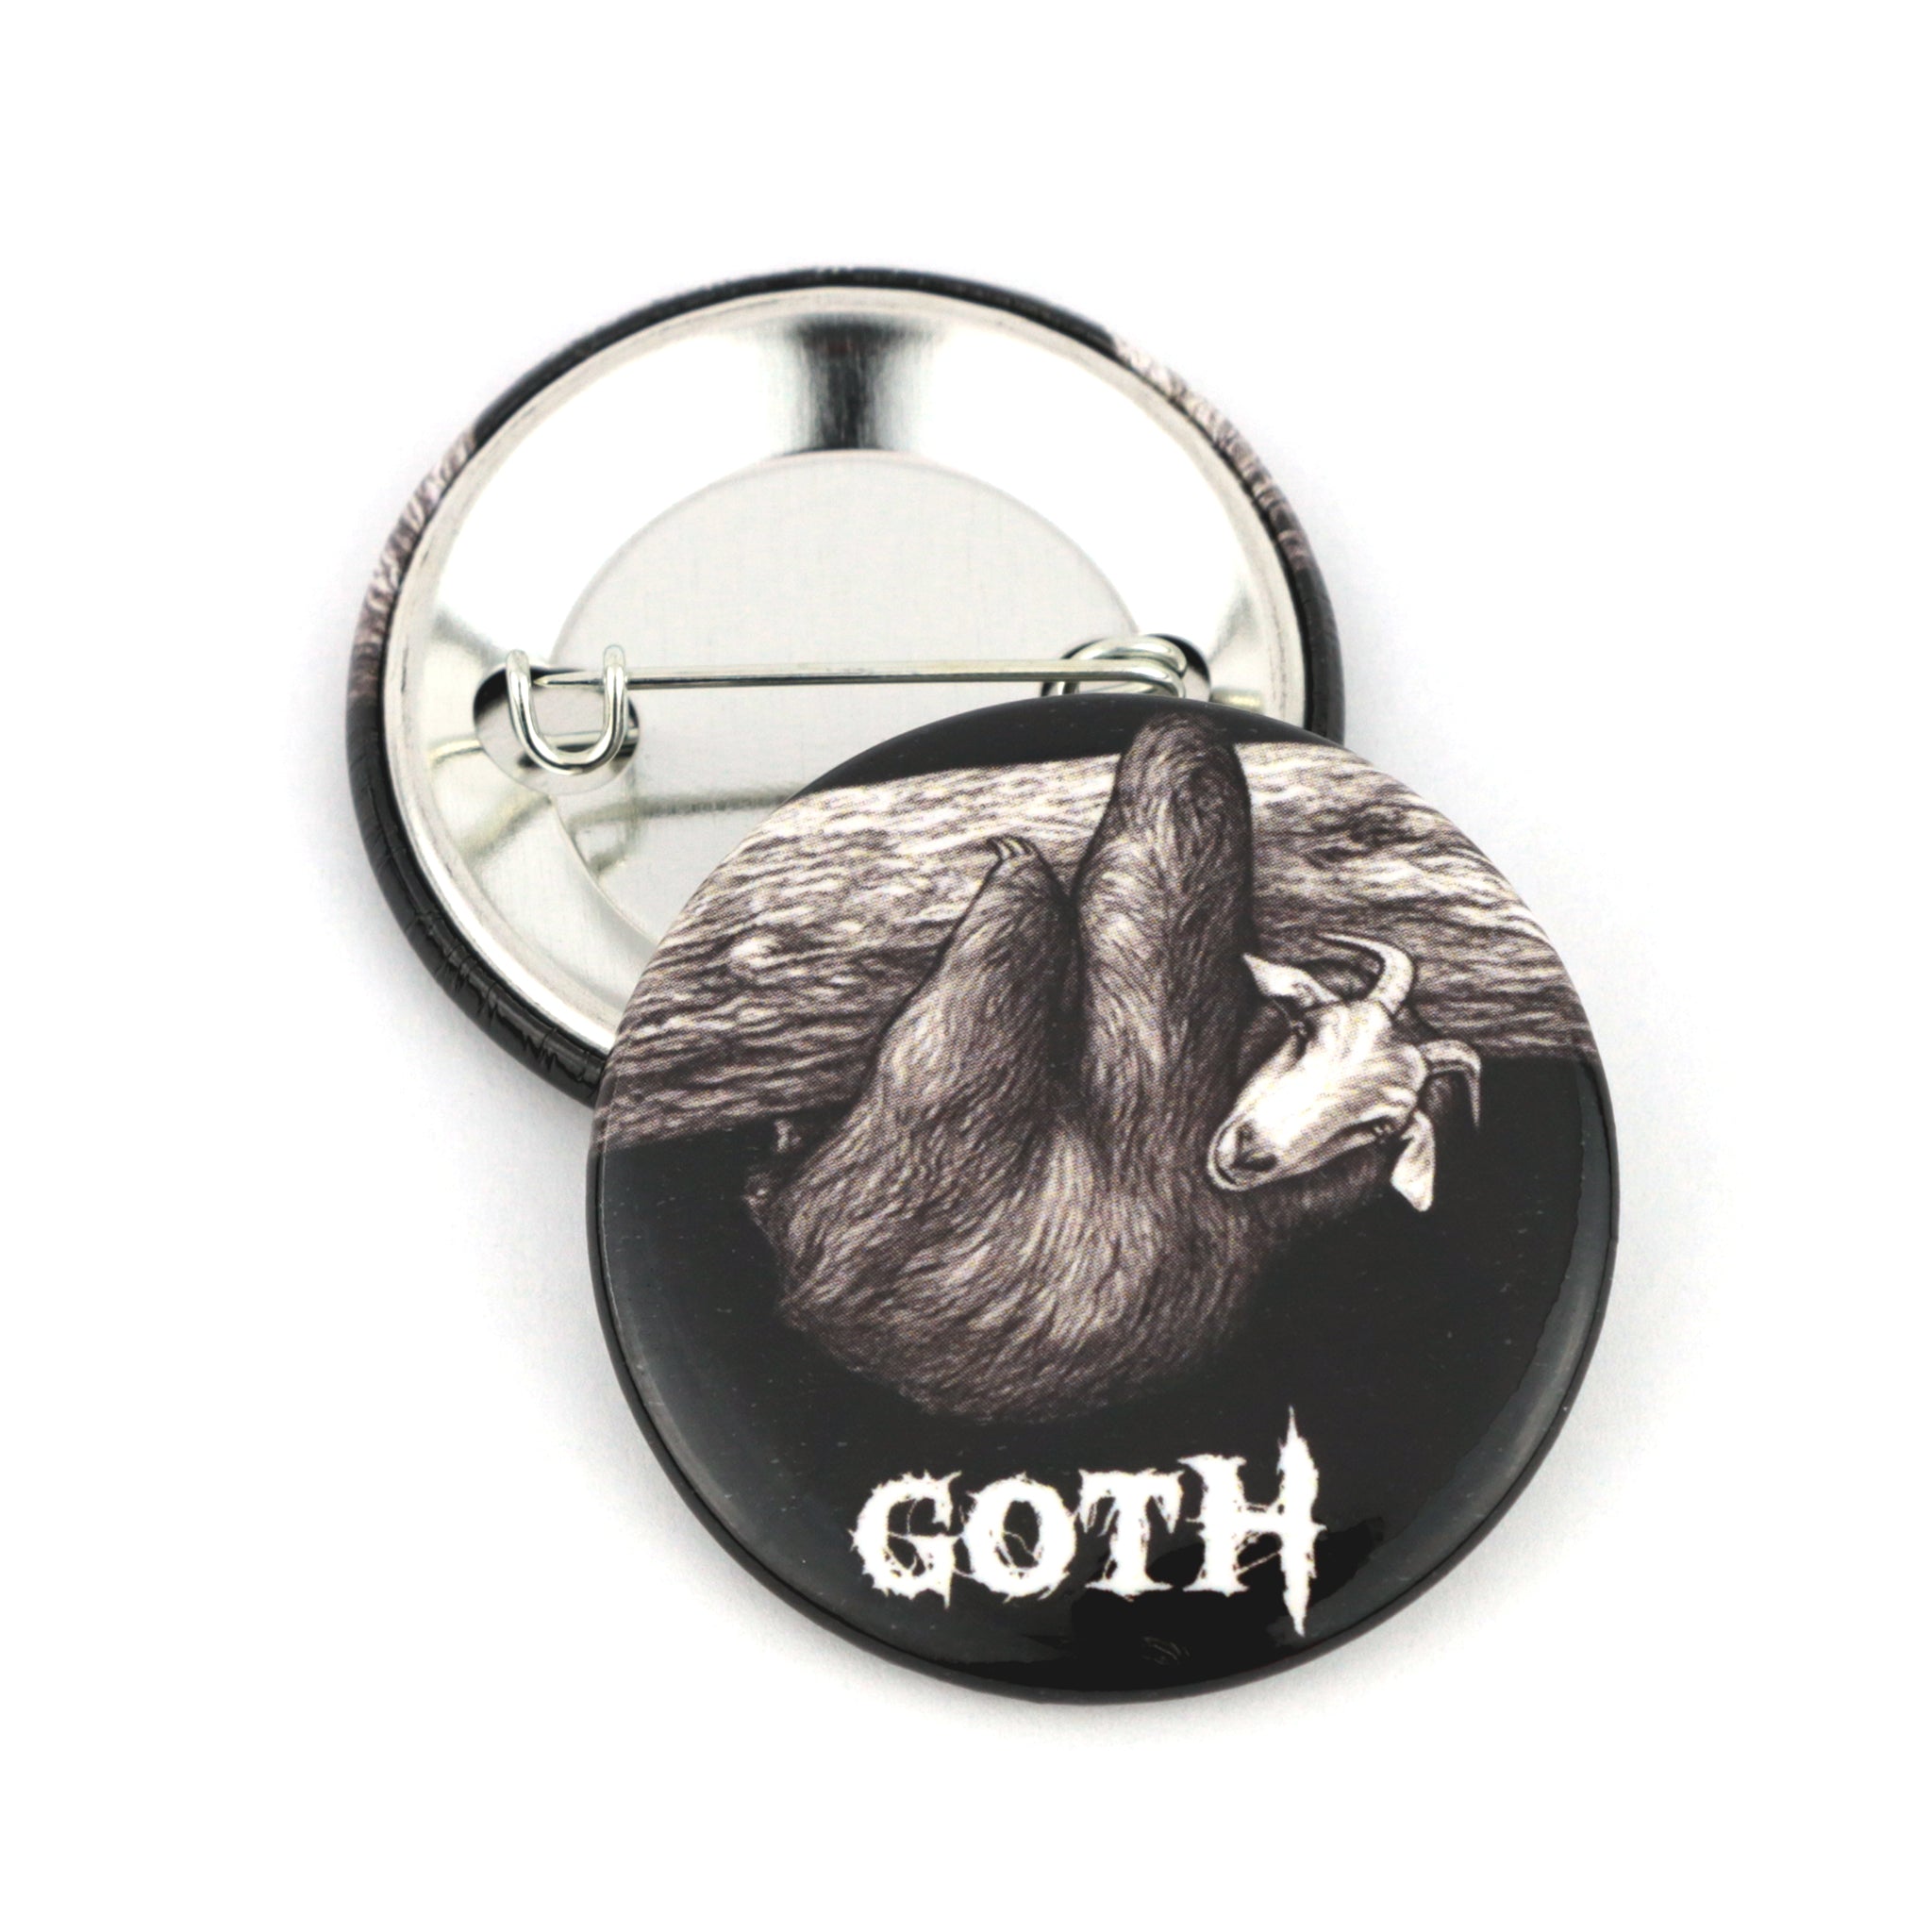 Goth 1.5" Pinback Button